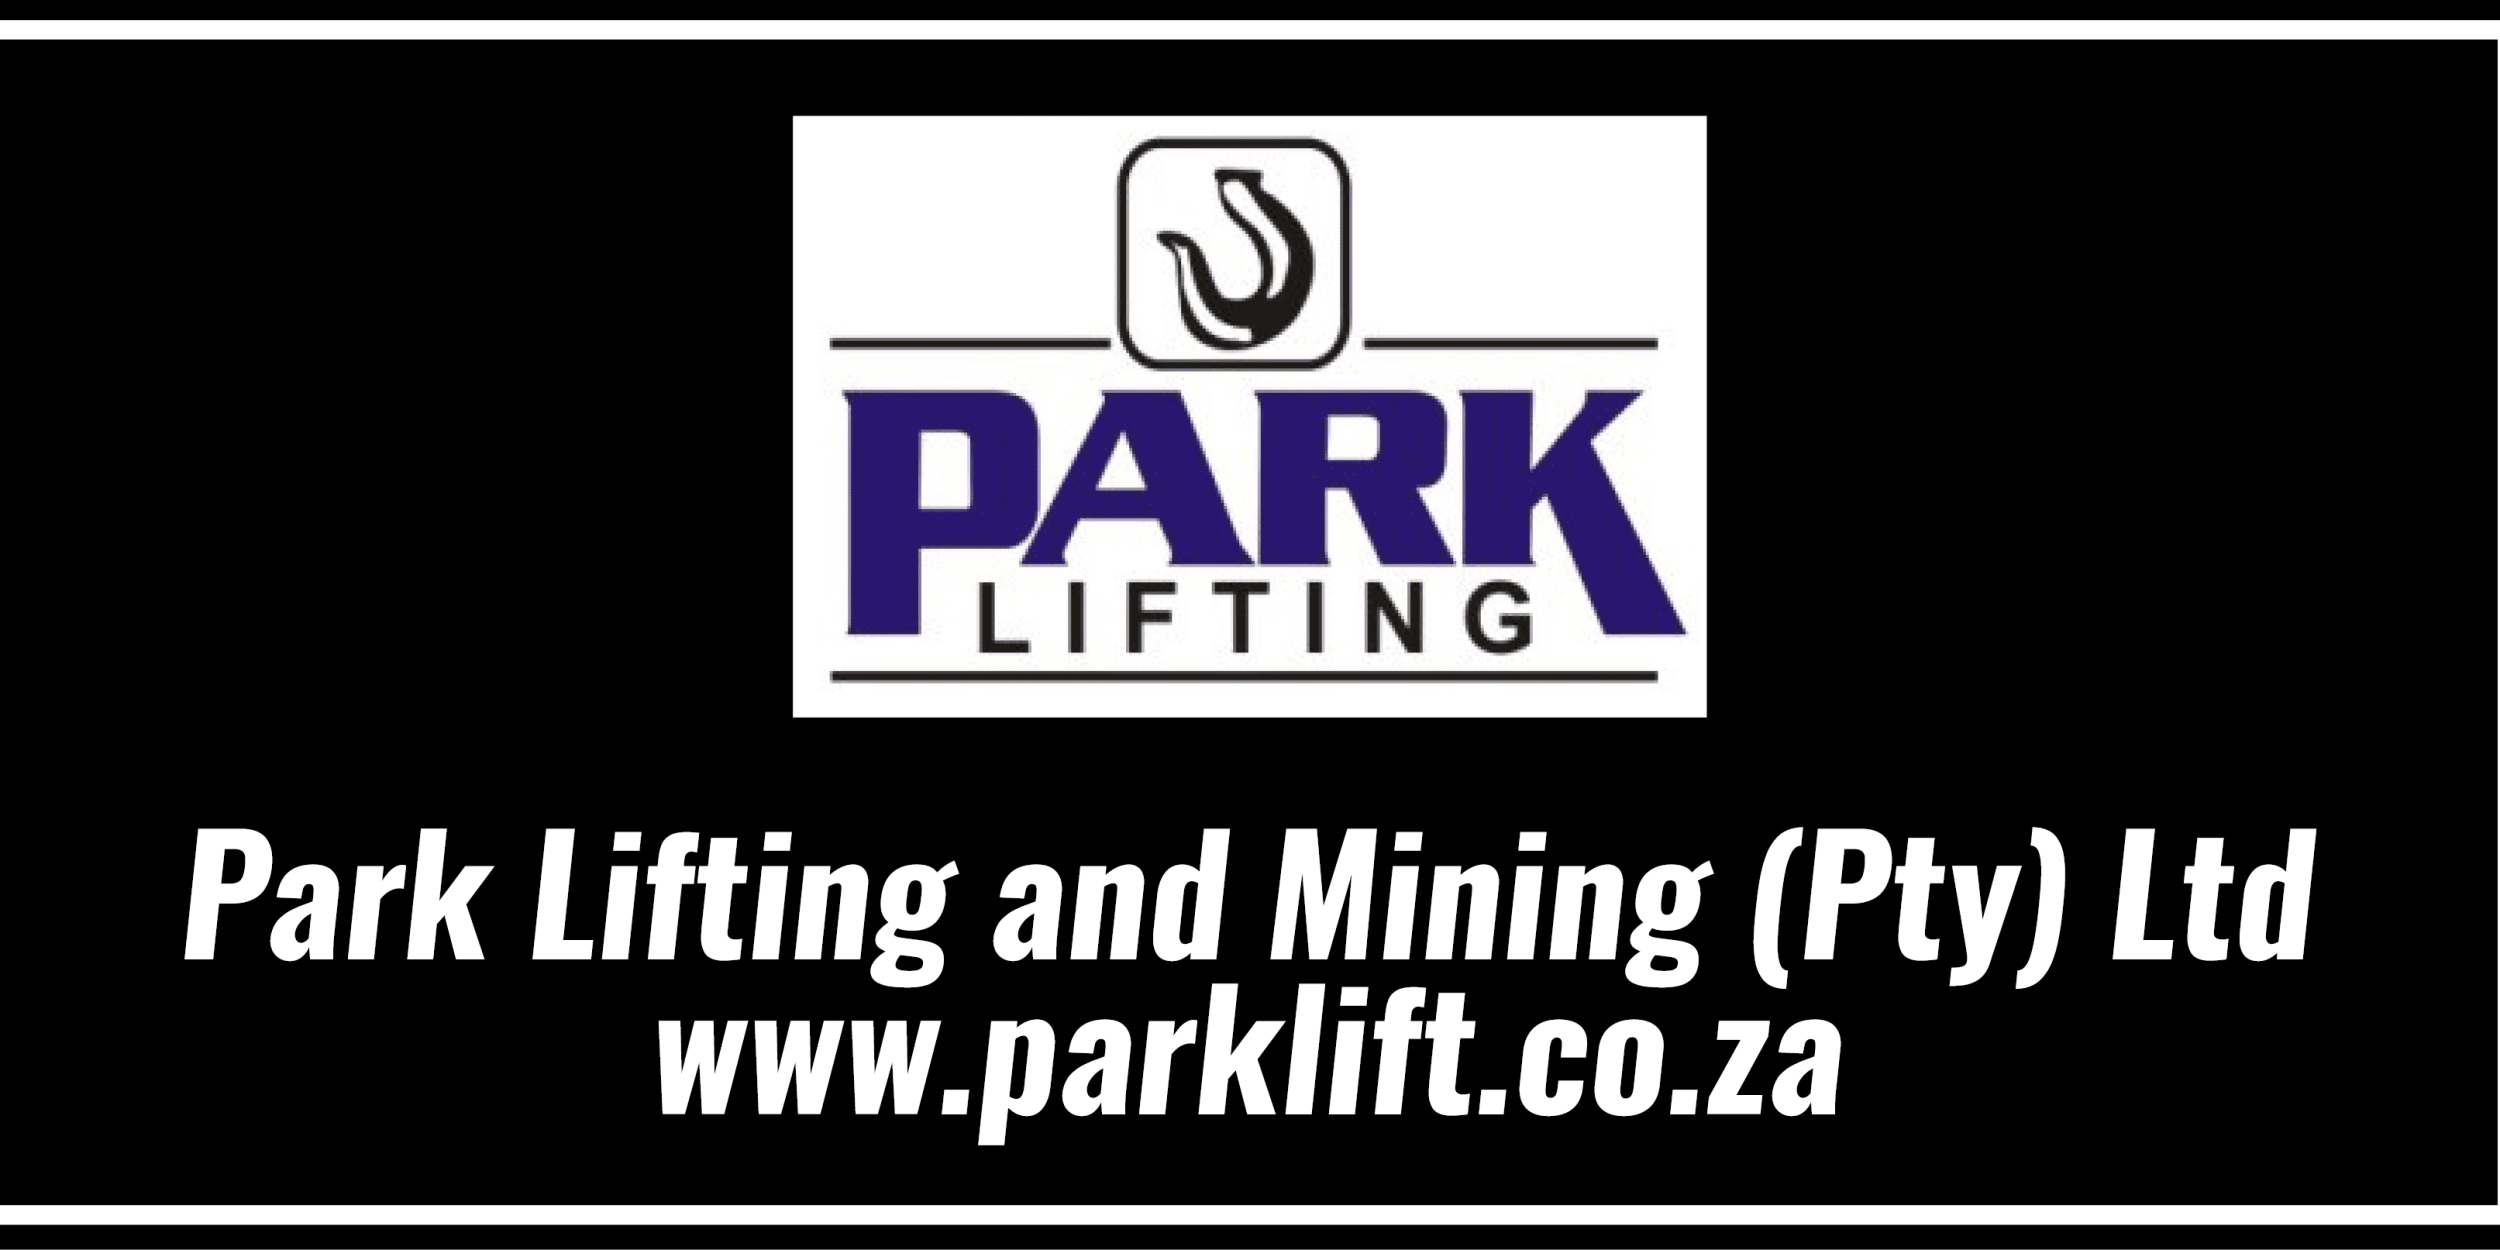 Park Lifting and Mining (Pty) Ltd